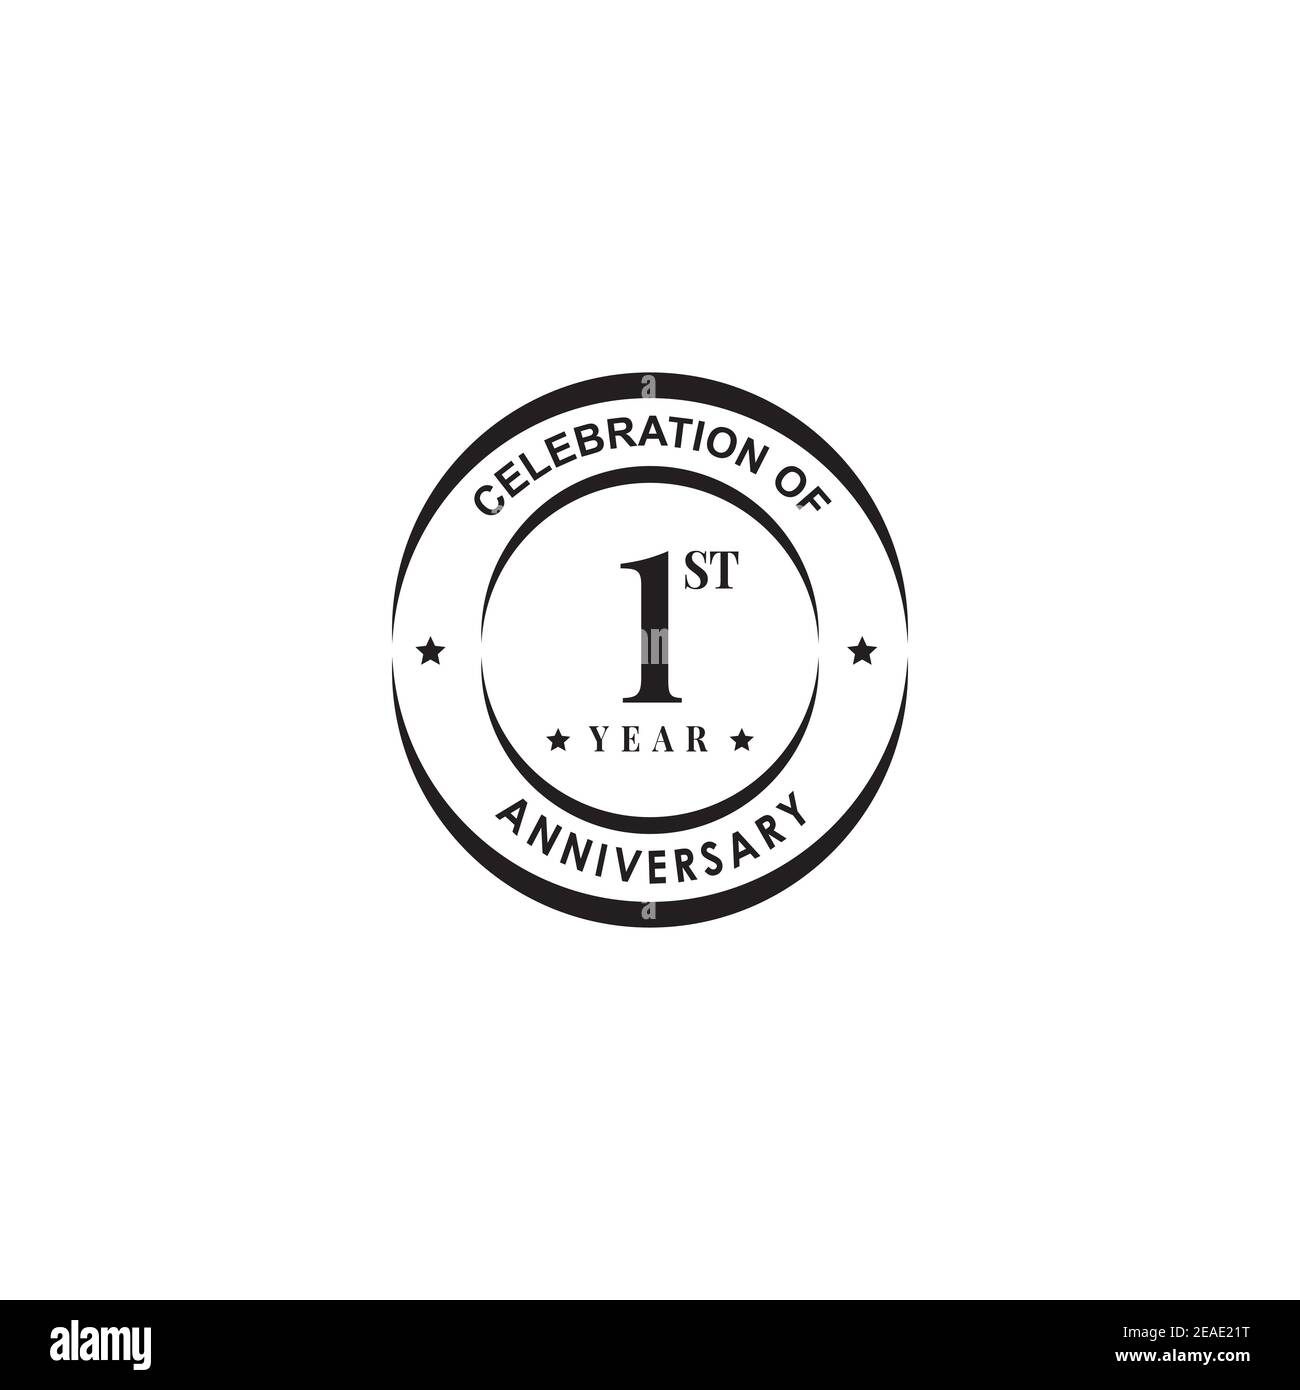 1st year celebrating anniversary emblem logo design inspiration